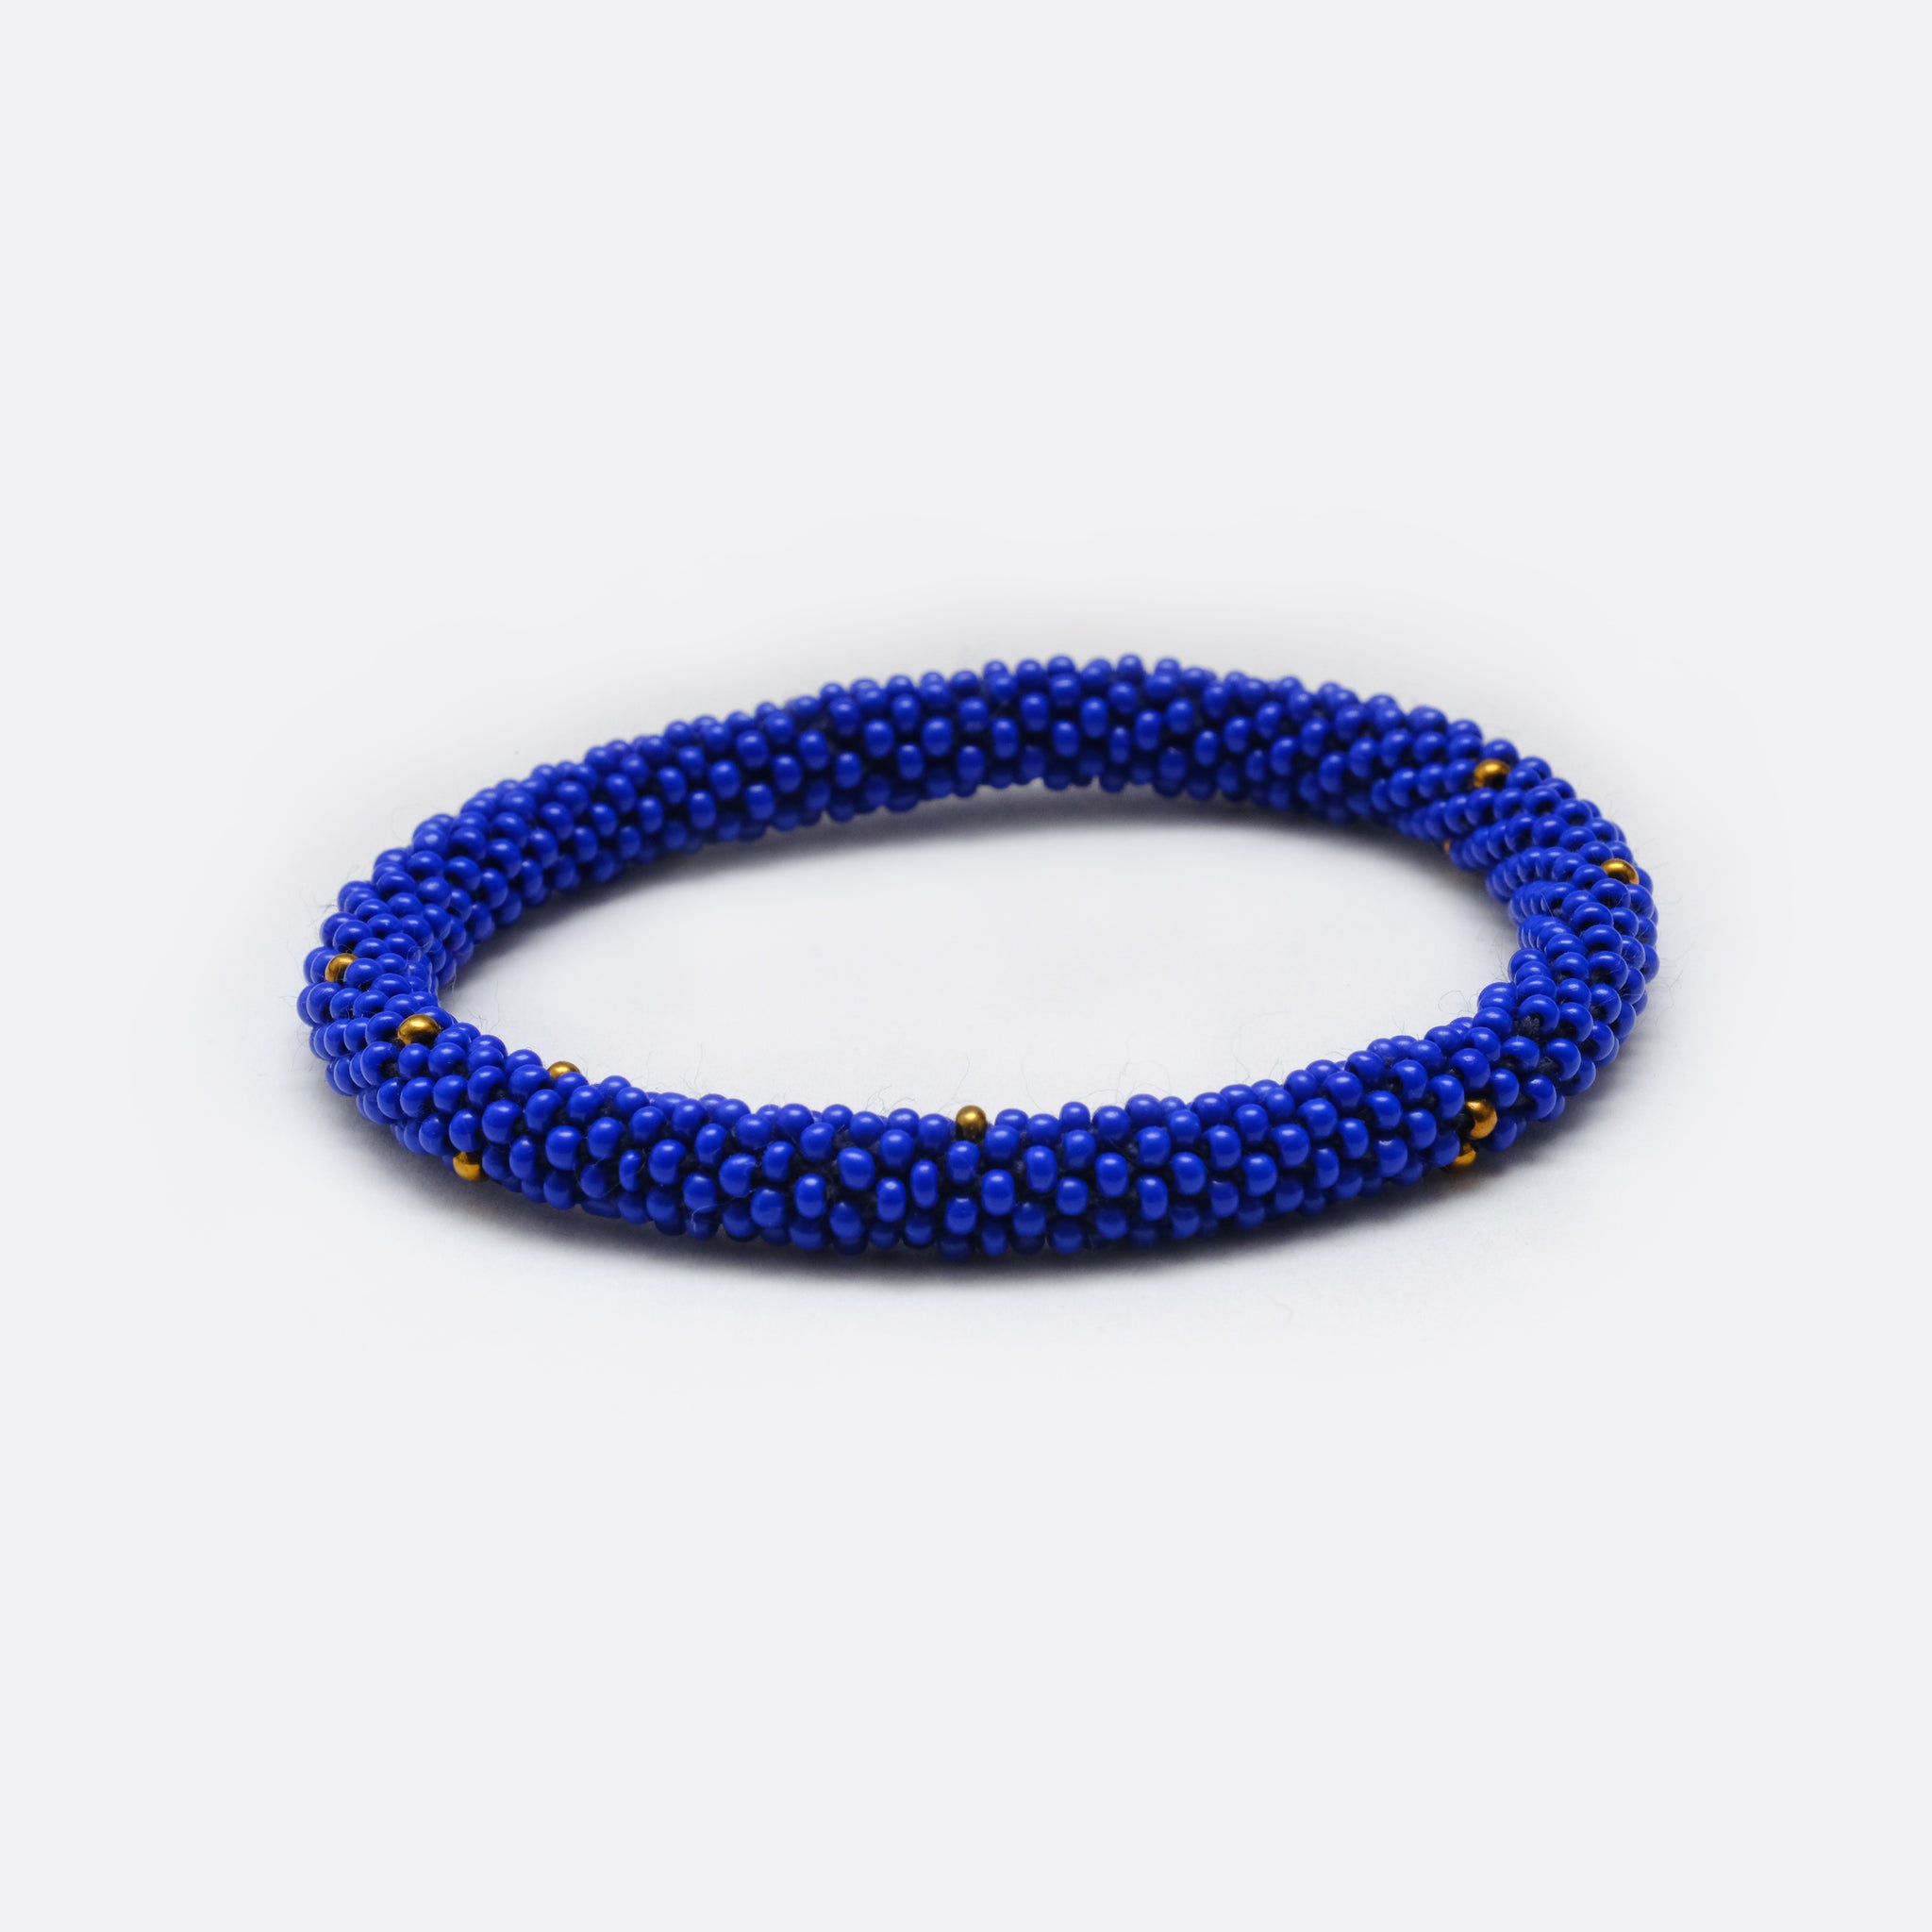 Beaded Bracelet - Old Blue & Golden Dots